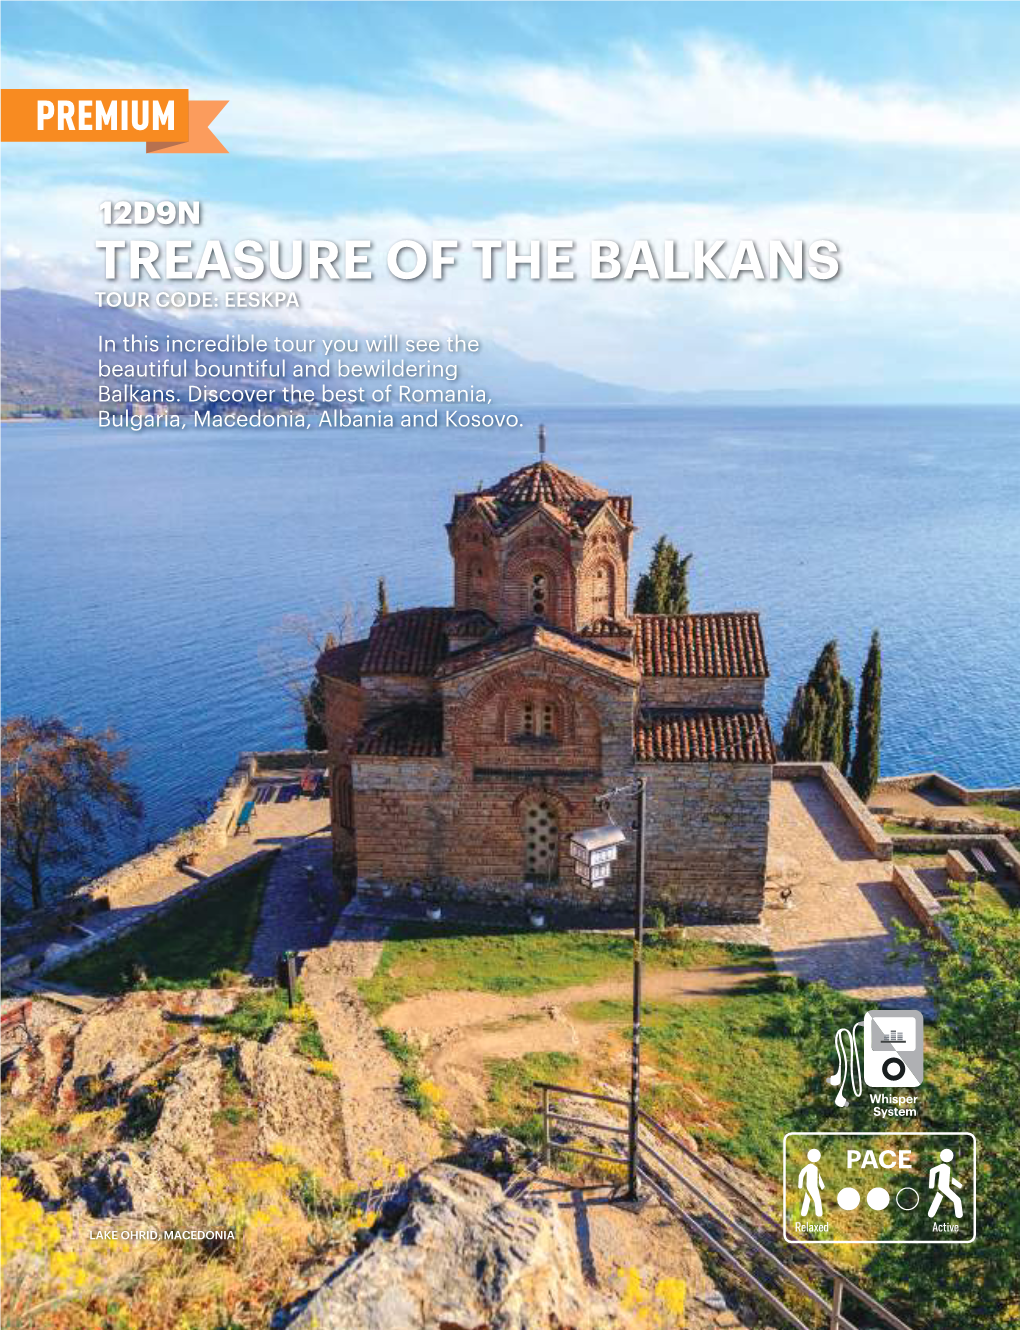 Treasure of the Balkans Tour Code: Eeskpa